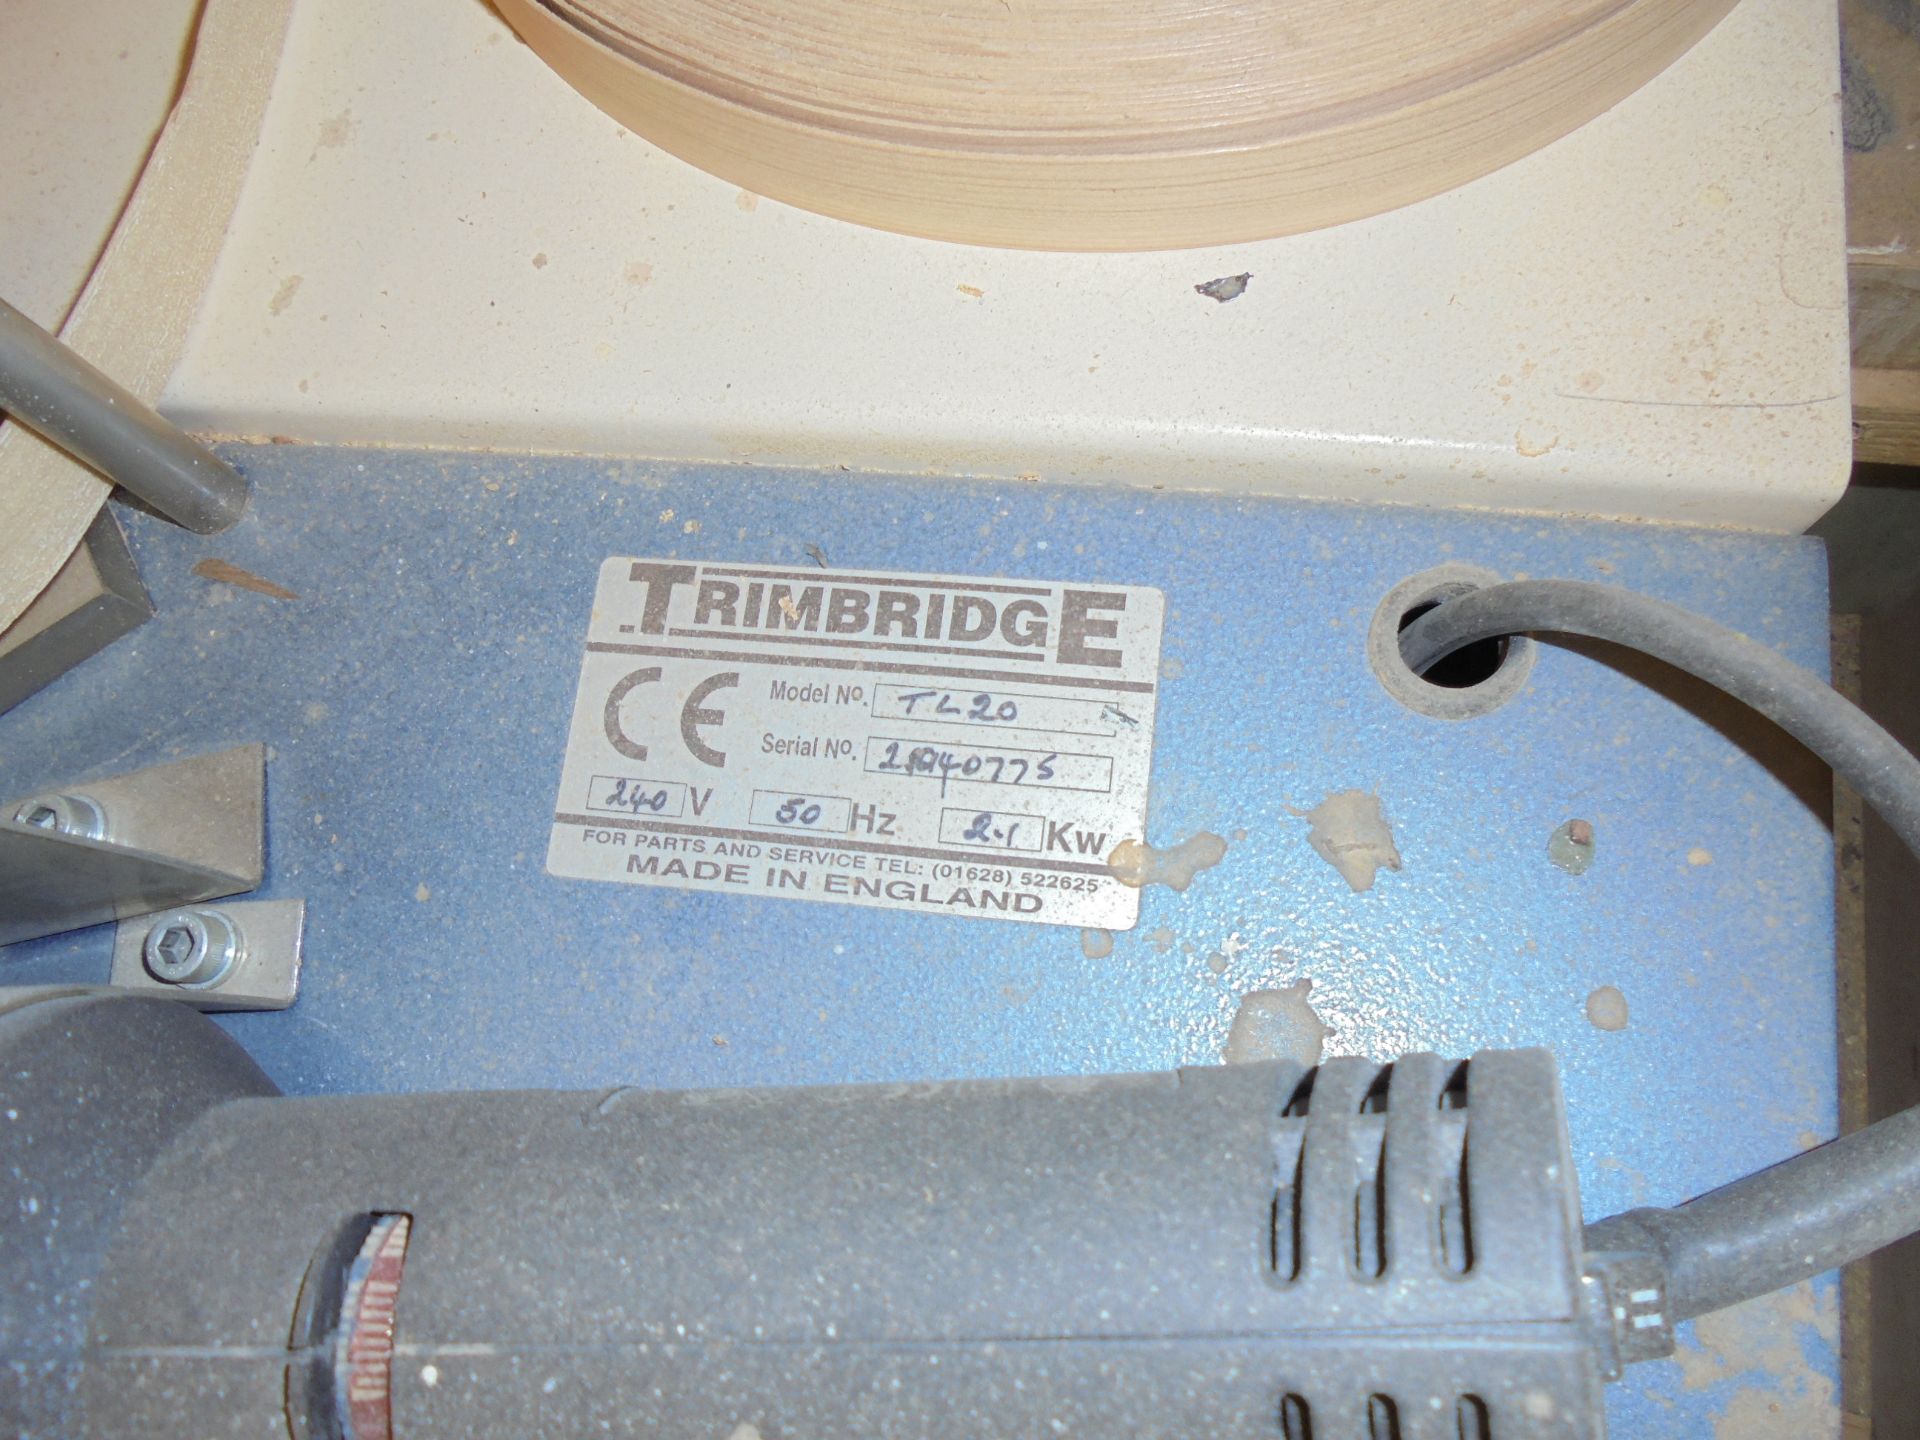 Trimbridge TL20 Edgebander, S/N 21040775 - Image 2 of 2